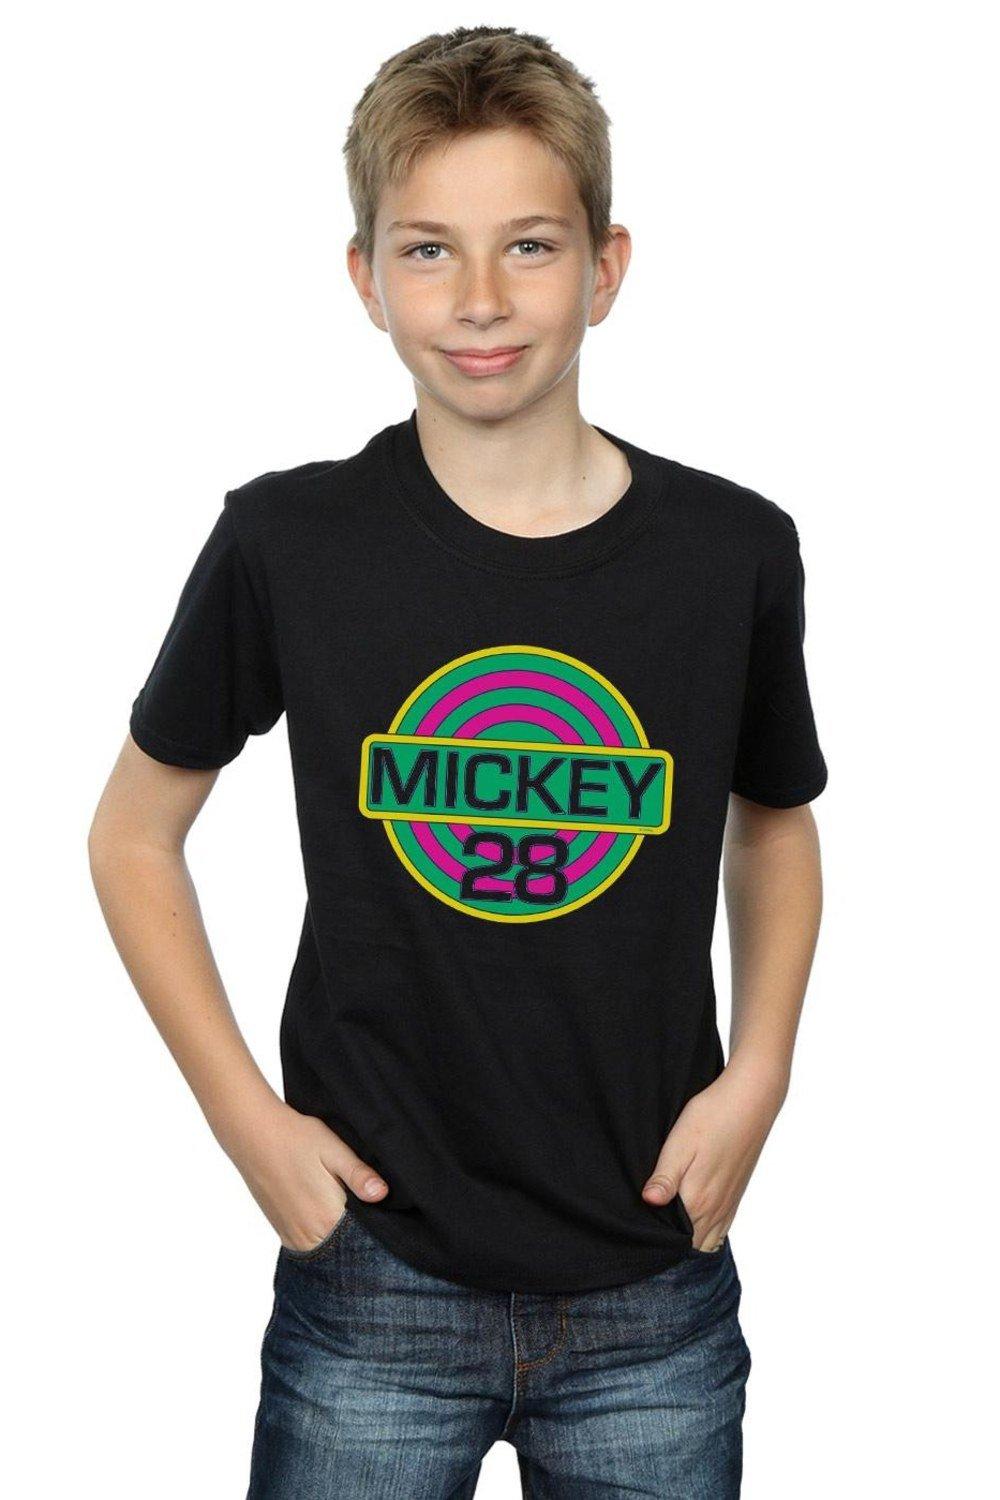 Mickey Mouse Mickey 28 T-Shirt